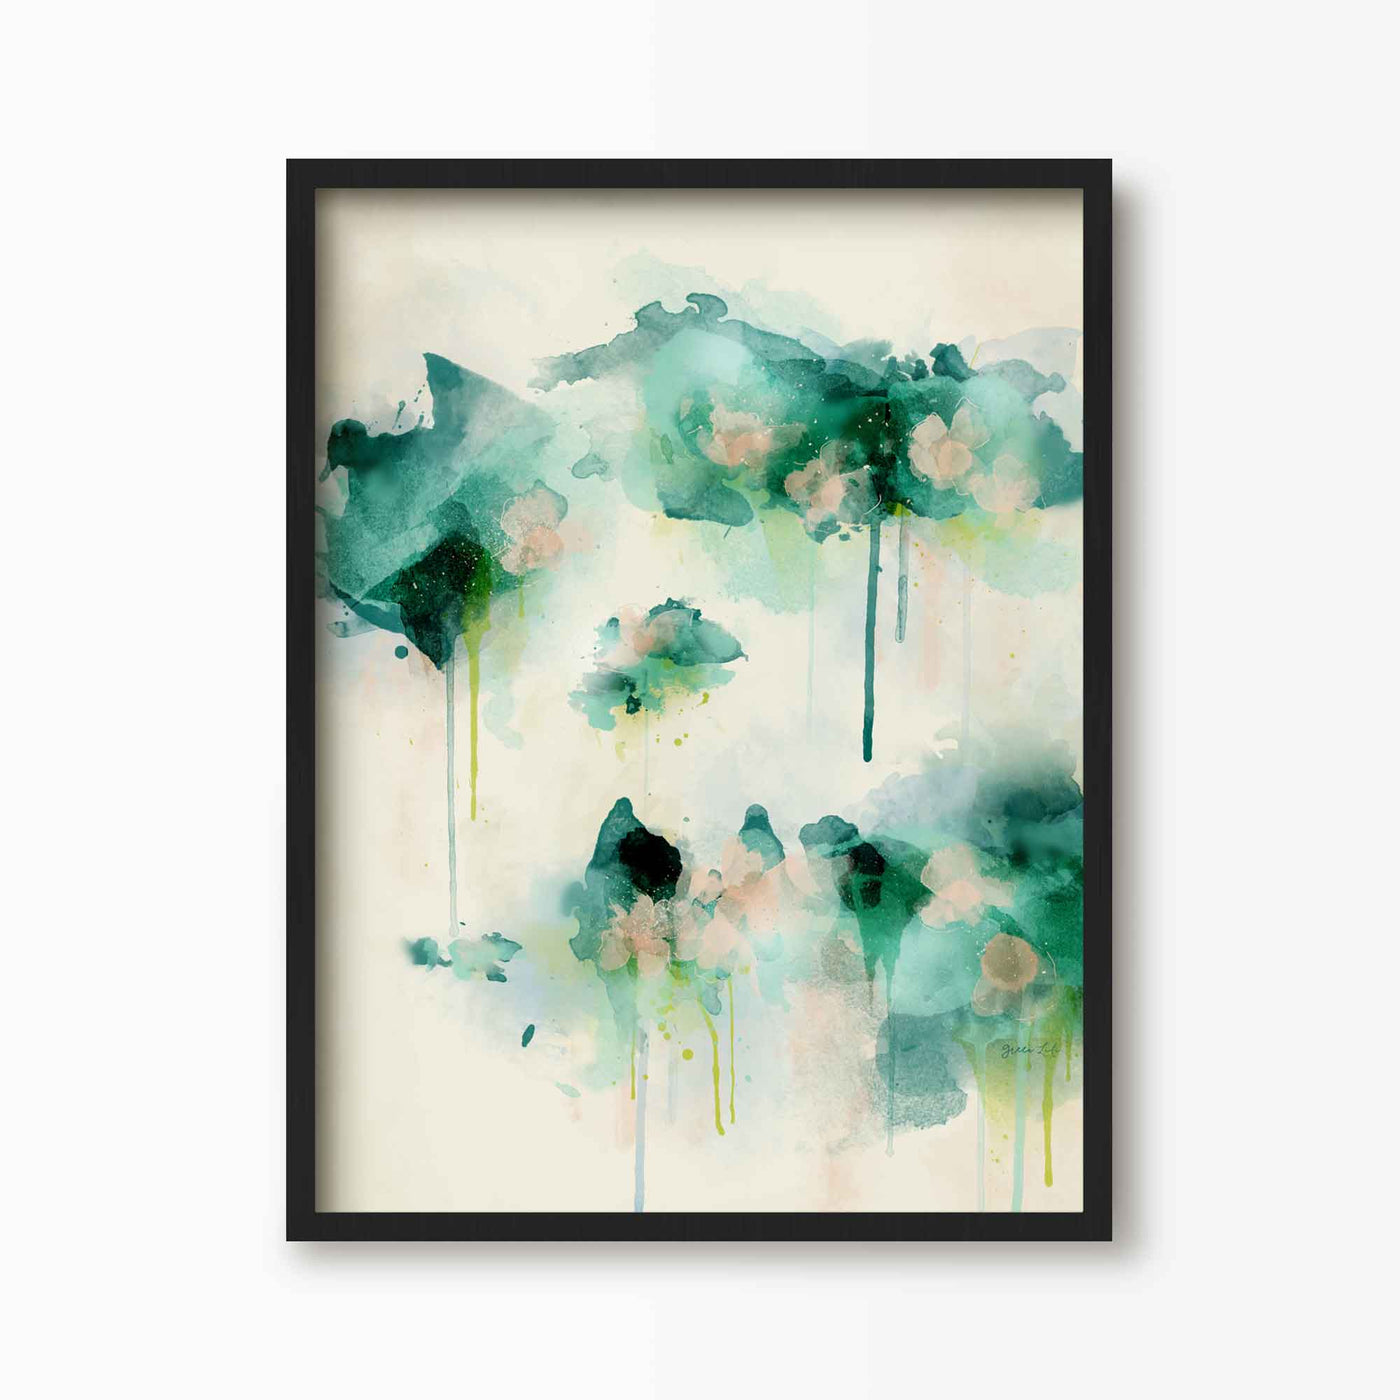 Green Lili 30x40cm (12x16") / Black Frame Spring Dream Abstract Floral Art Print